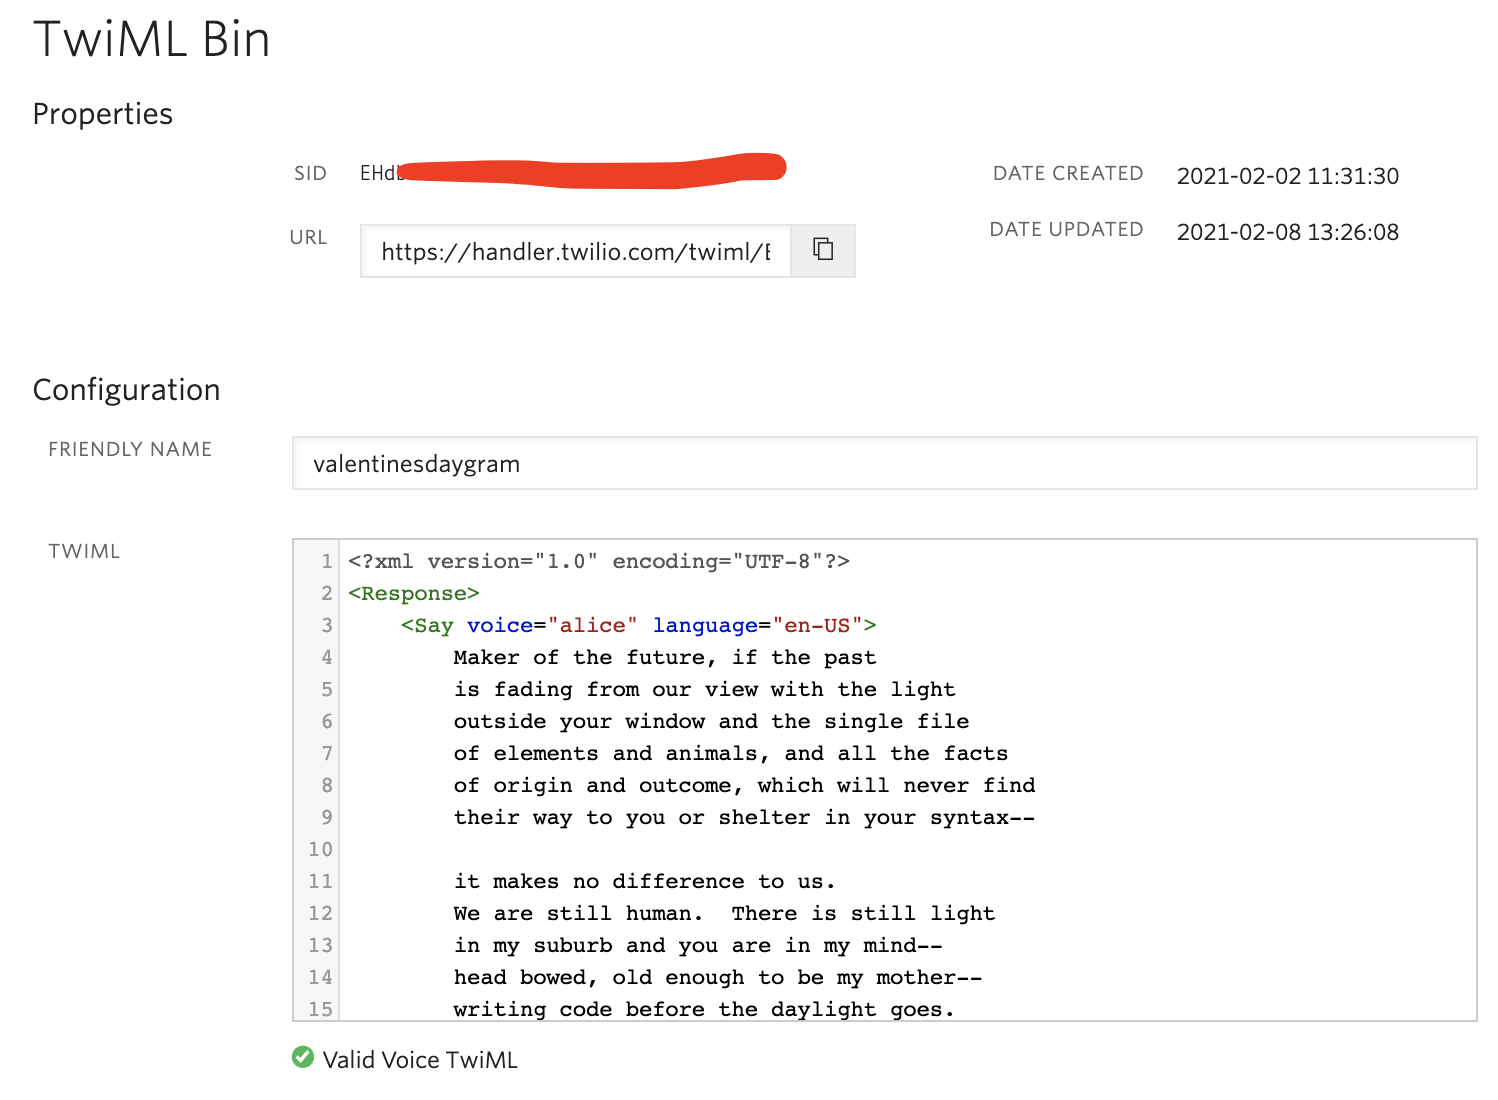 screenshot of TwiML Bin properties and configuration